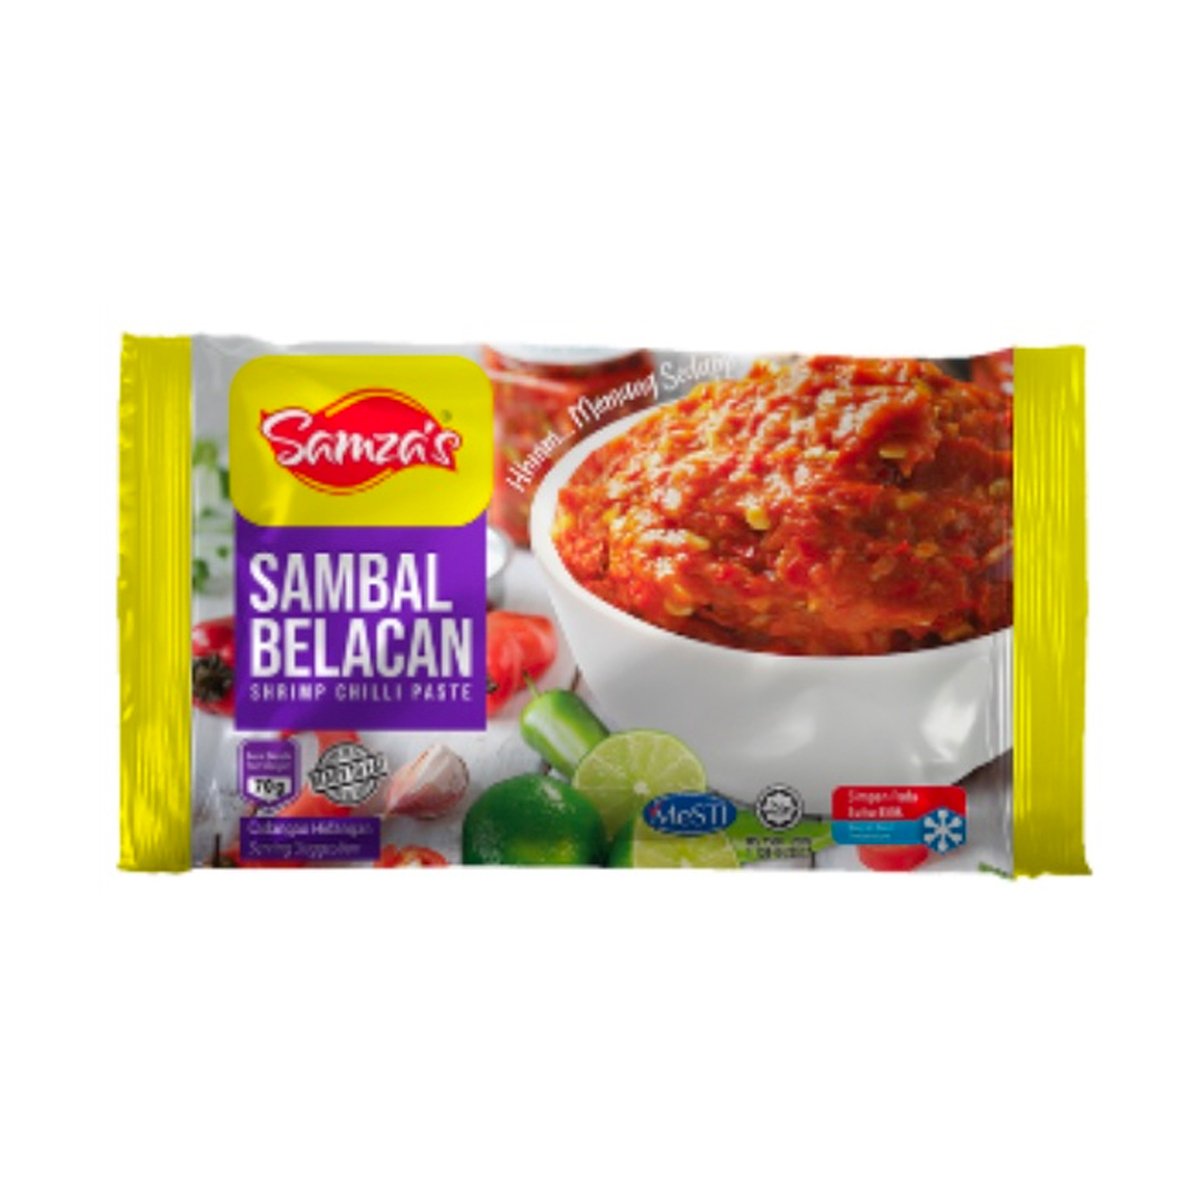 Samza's Sambal Belacan 70g